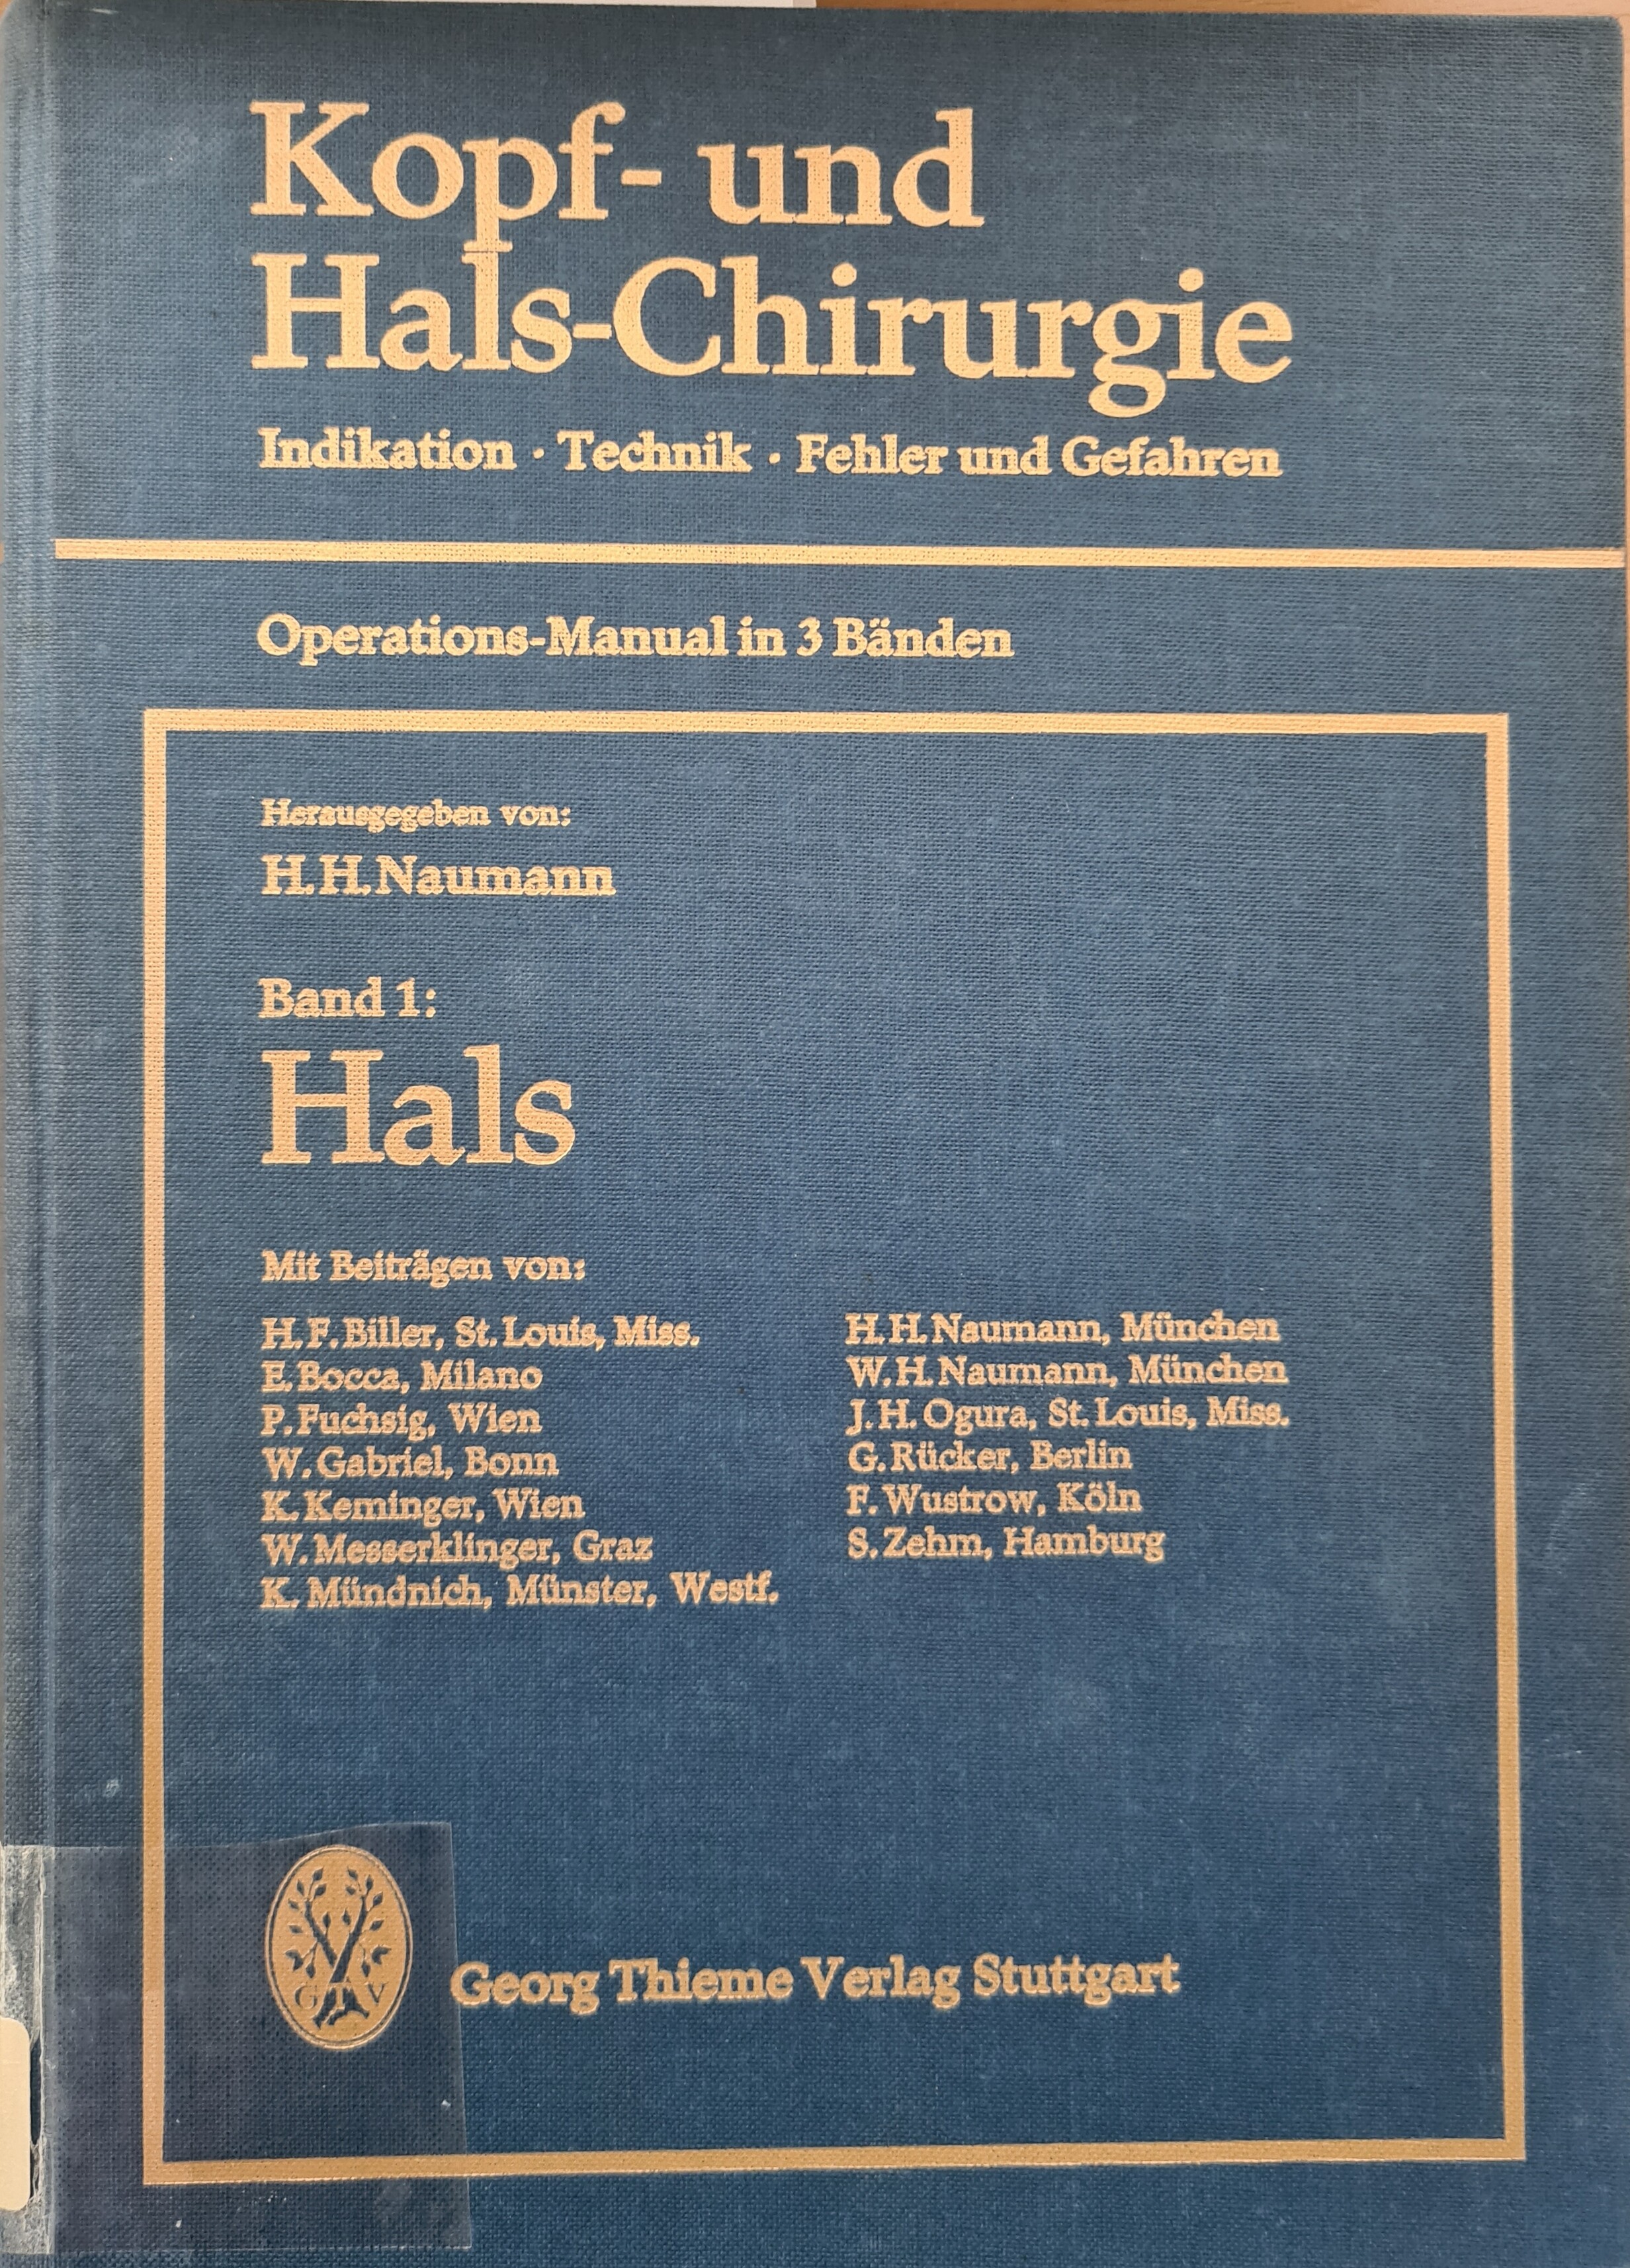 Kopf- und Hals-Chirurgie, Band 1: Hals (Krankenhausmuseum Bielefeld e.V. CC BY-NC-SA)